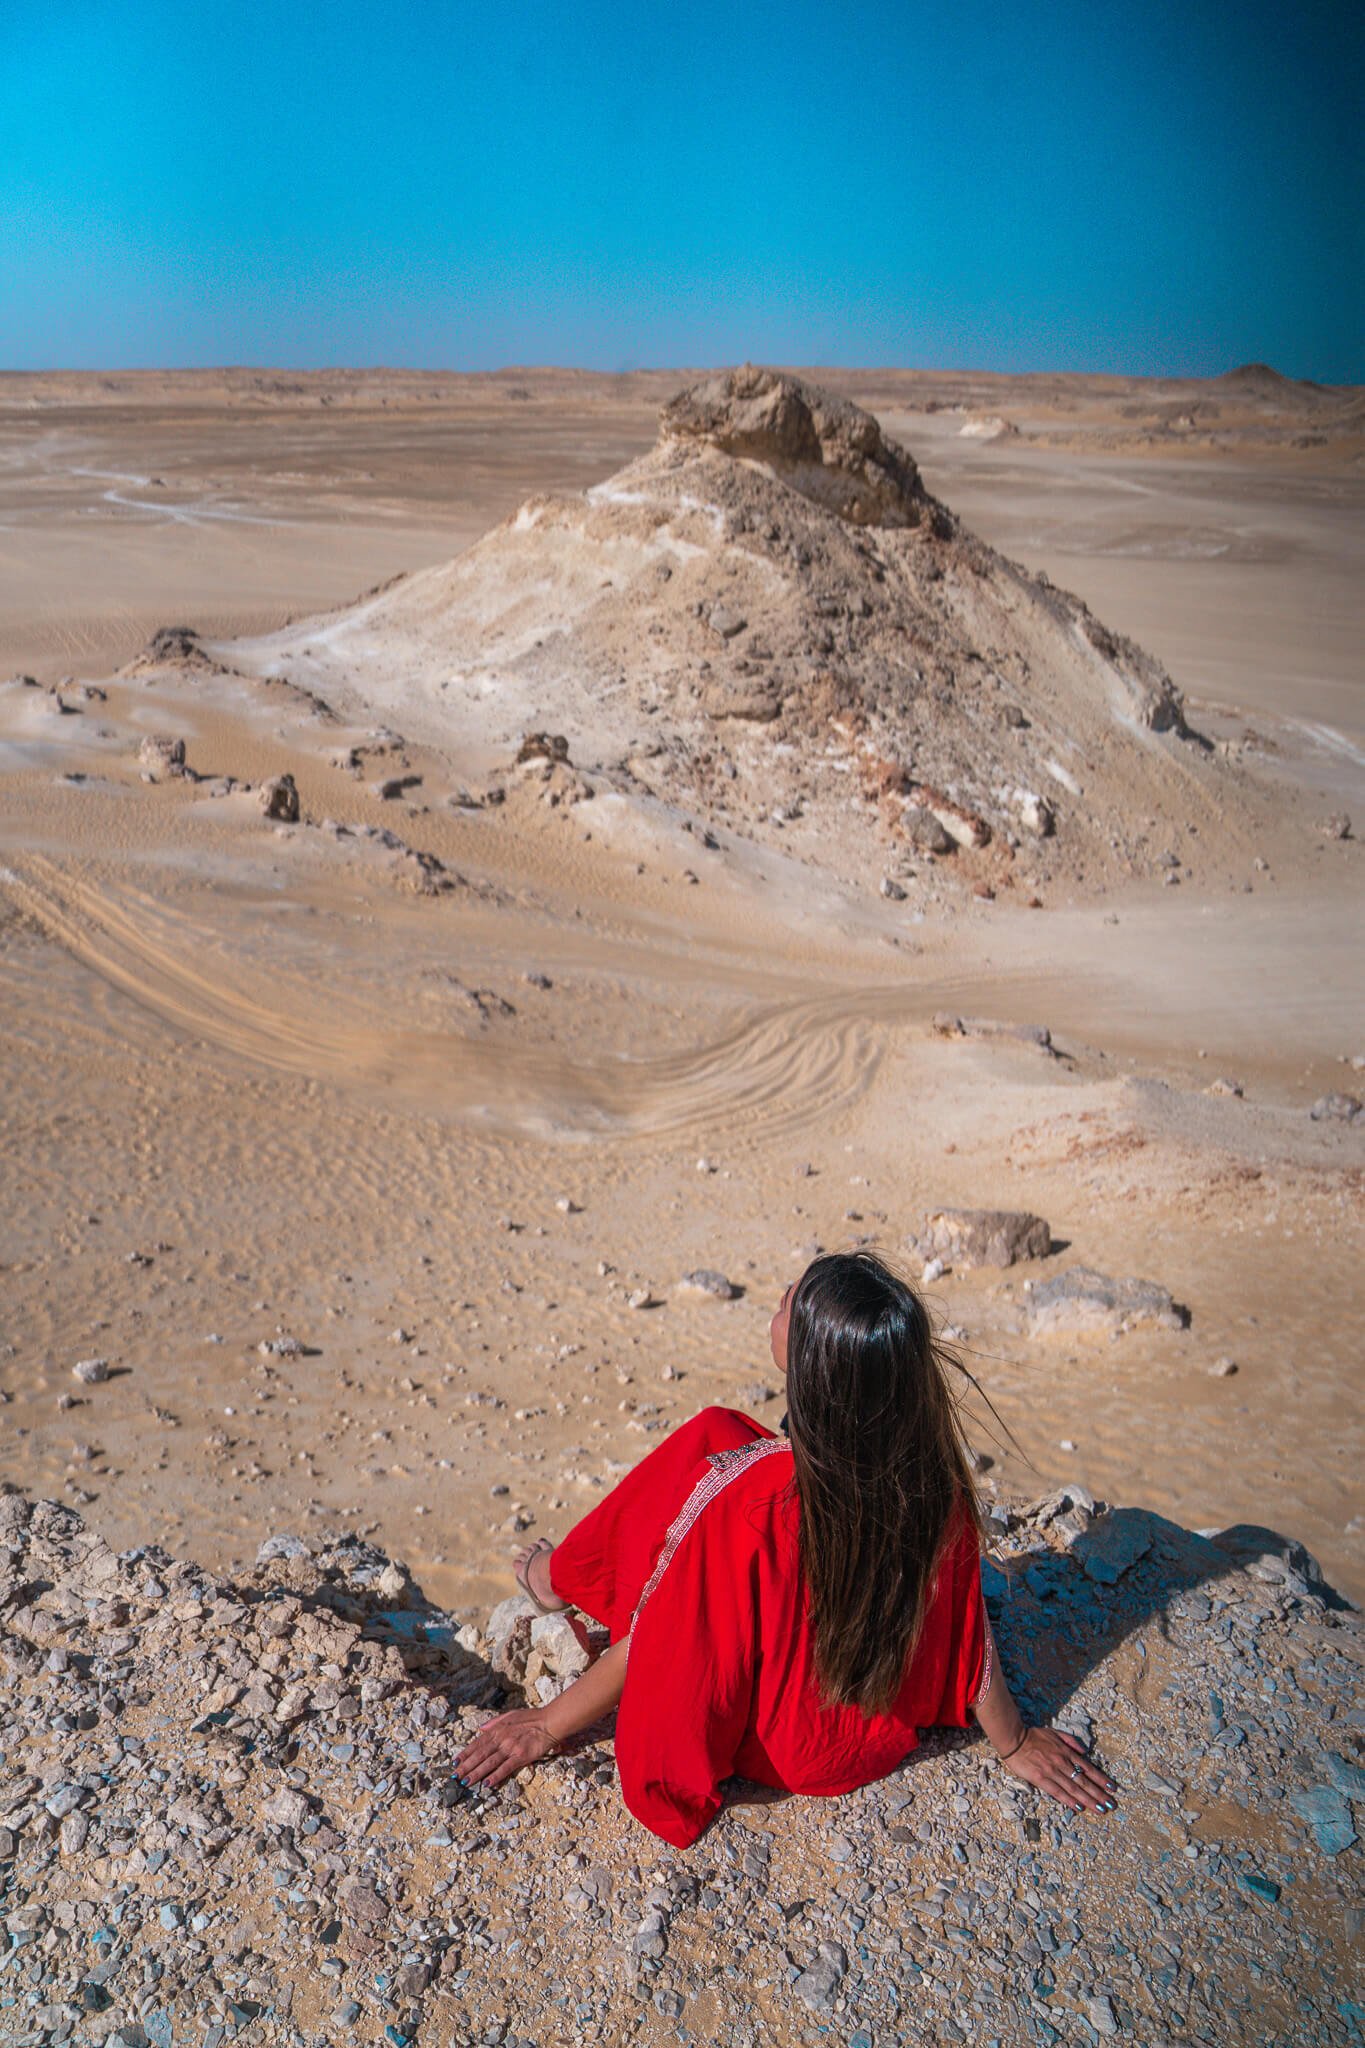 Crystal Mountain at the White Desert in Egypt